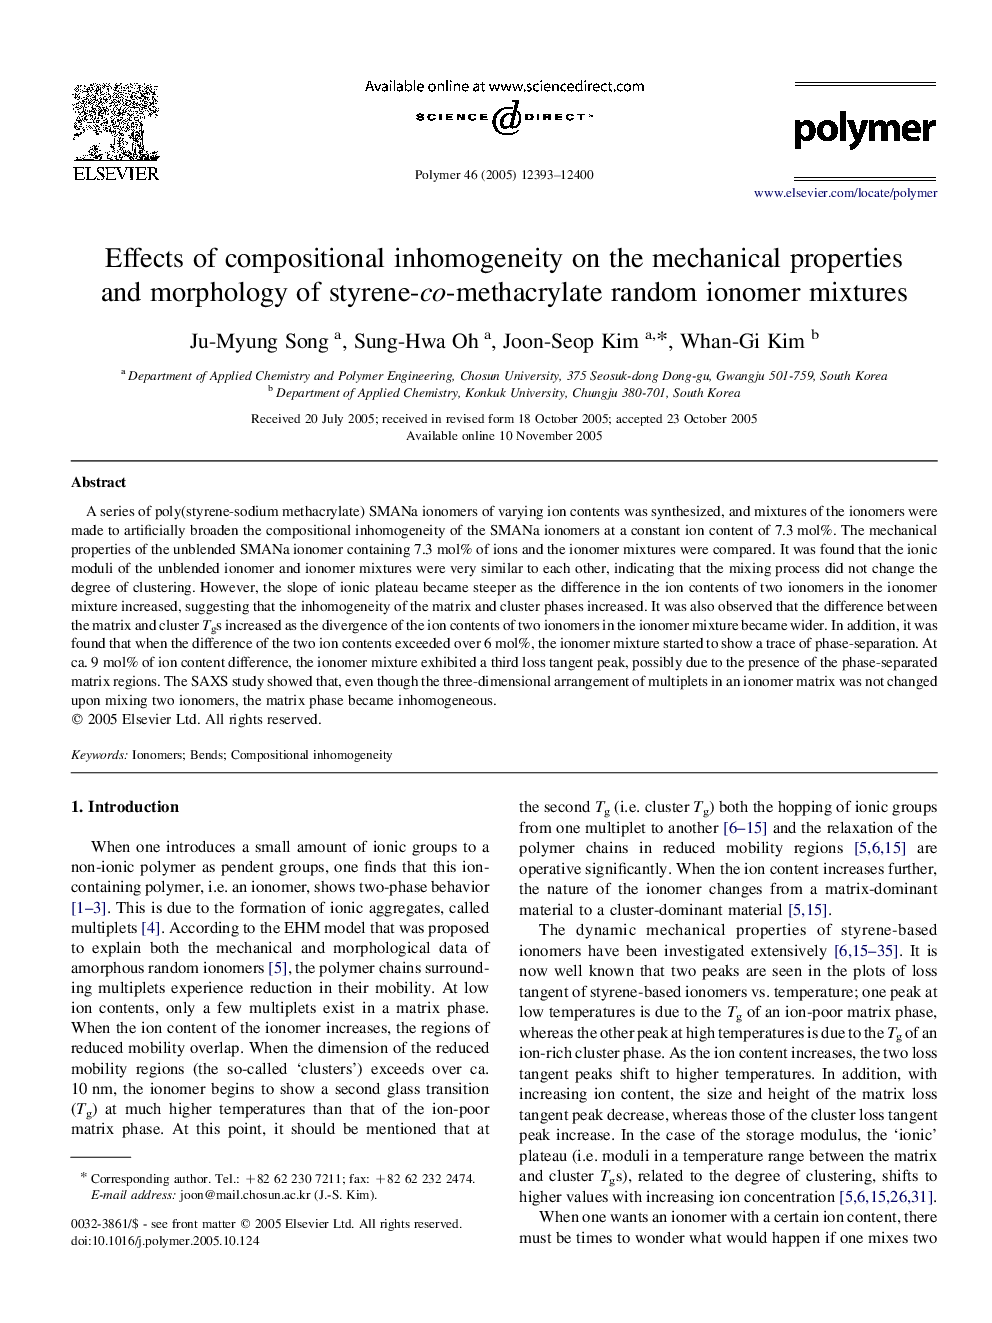 Effects of compositional inhomogeneity on the mechanical properties and morphology of styrene-co-methacrylate random ionomer mixtures